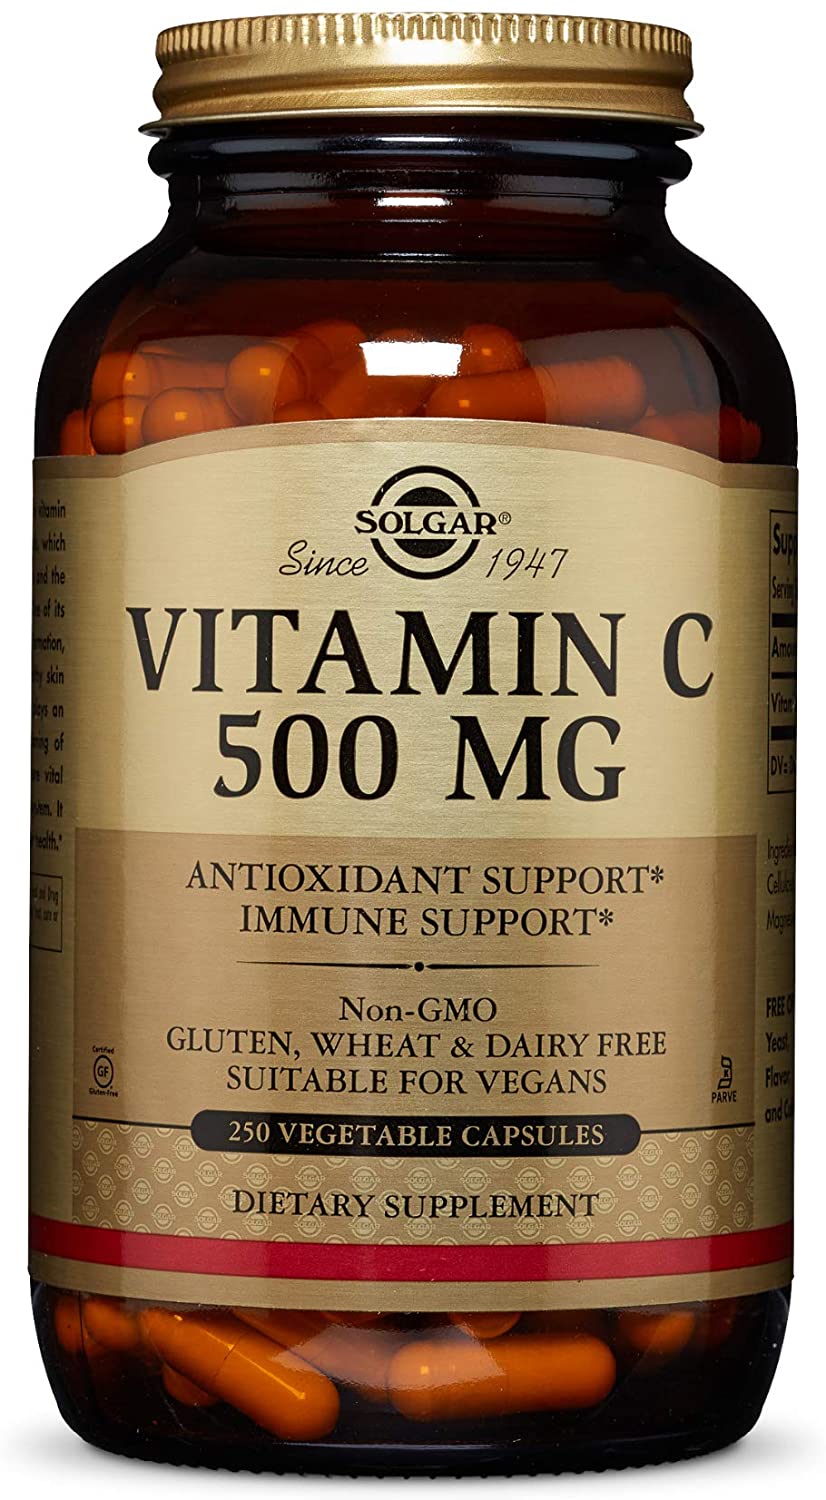 Solgar Vitamin C 500 Mg, 250 Vegetable Capsules